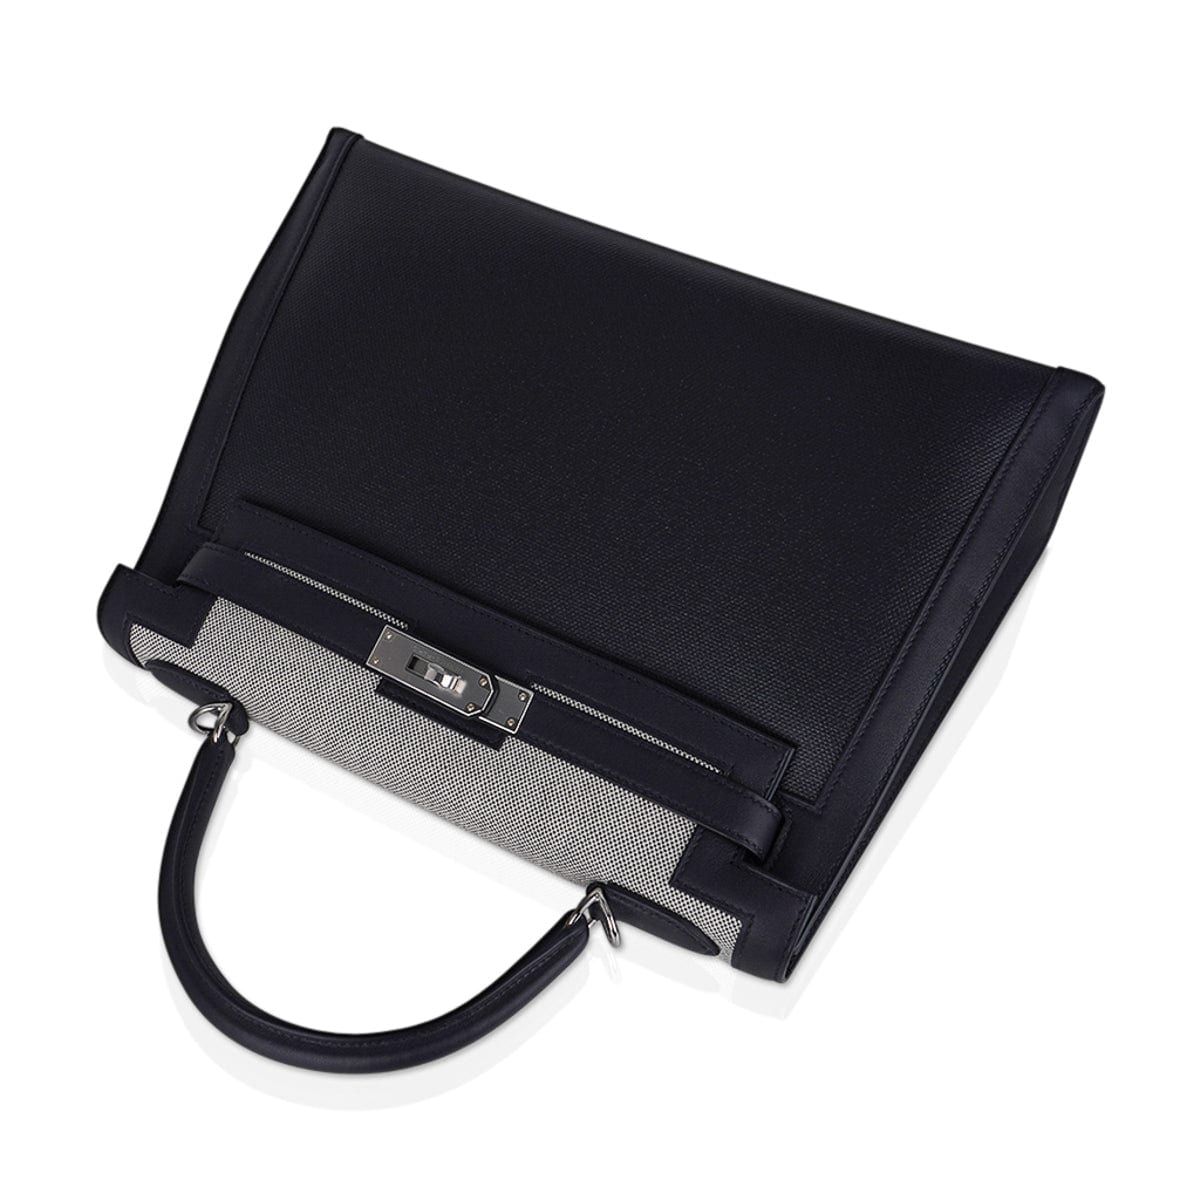 Hermes Kelly bag 32 Sellier Black Epsom leather Silver hardware